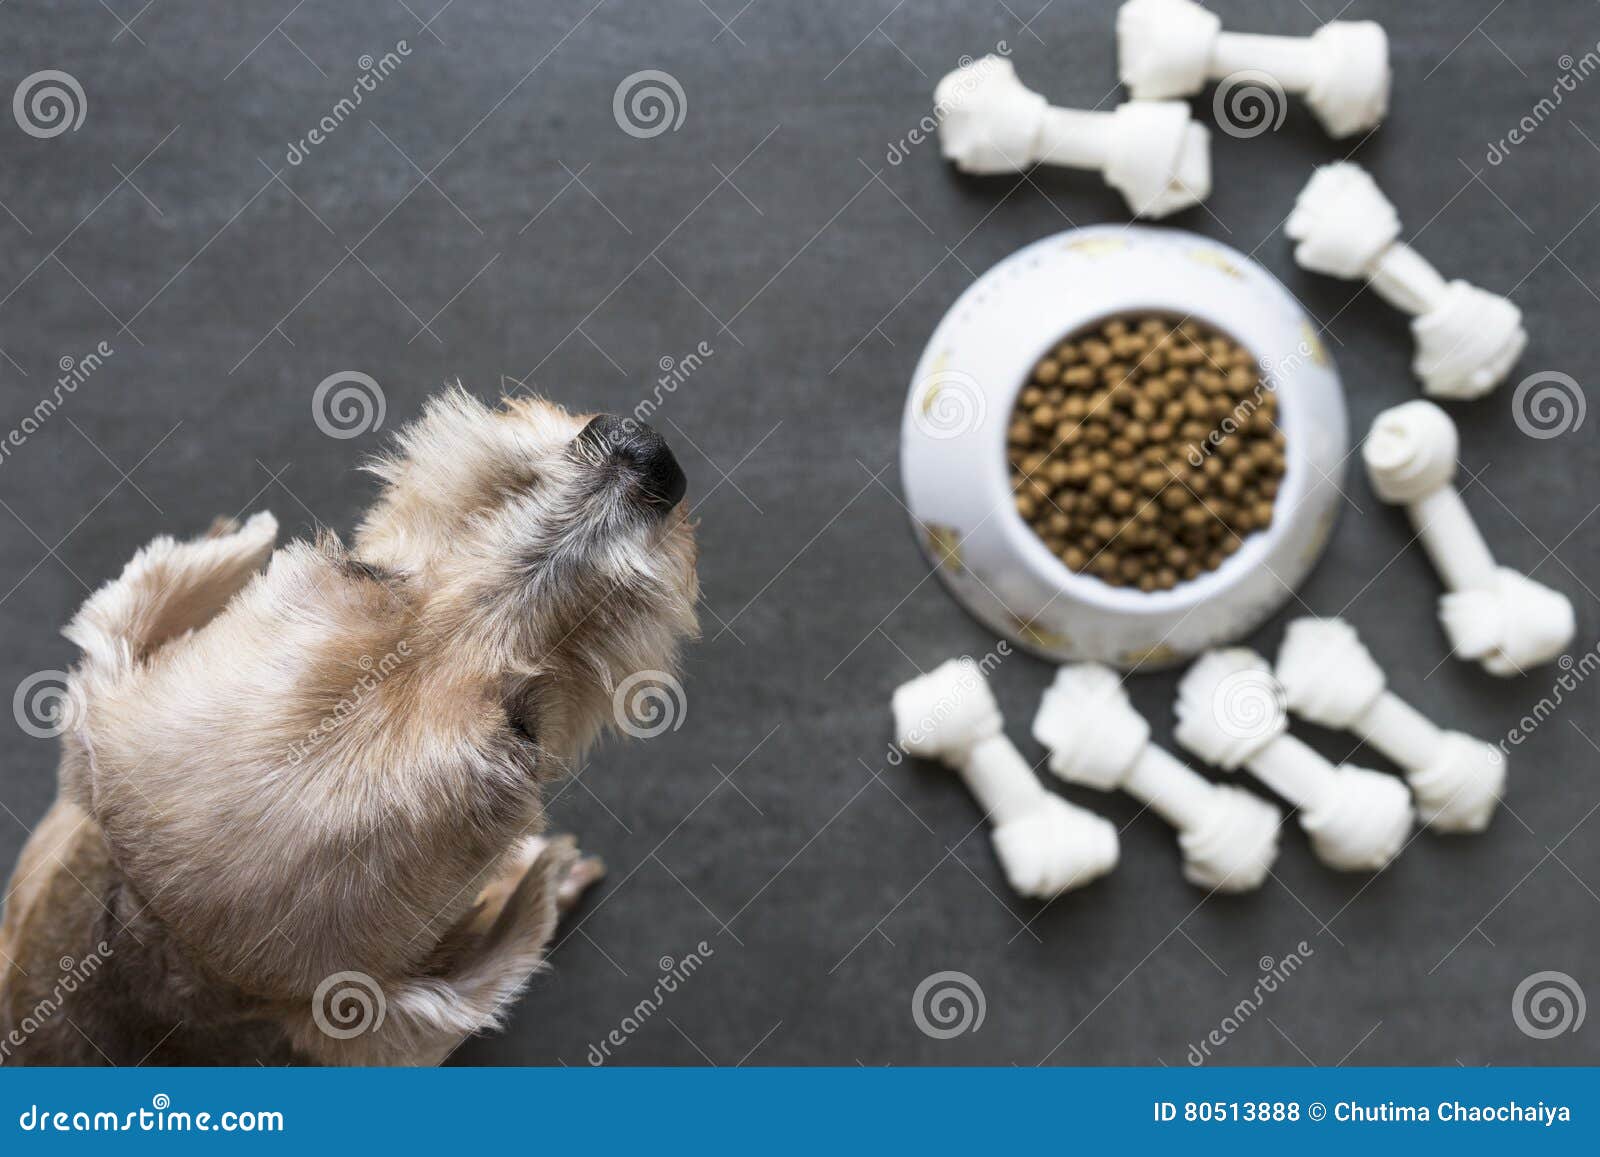 dog besides a bowl of kibble food